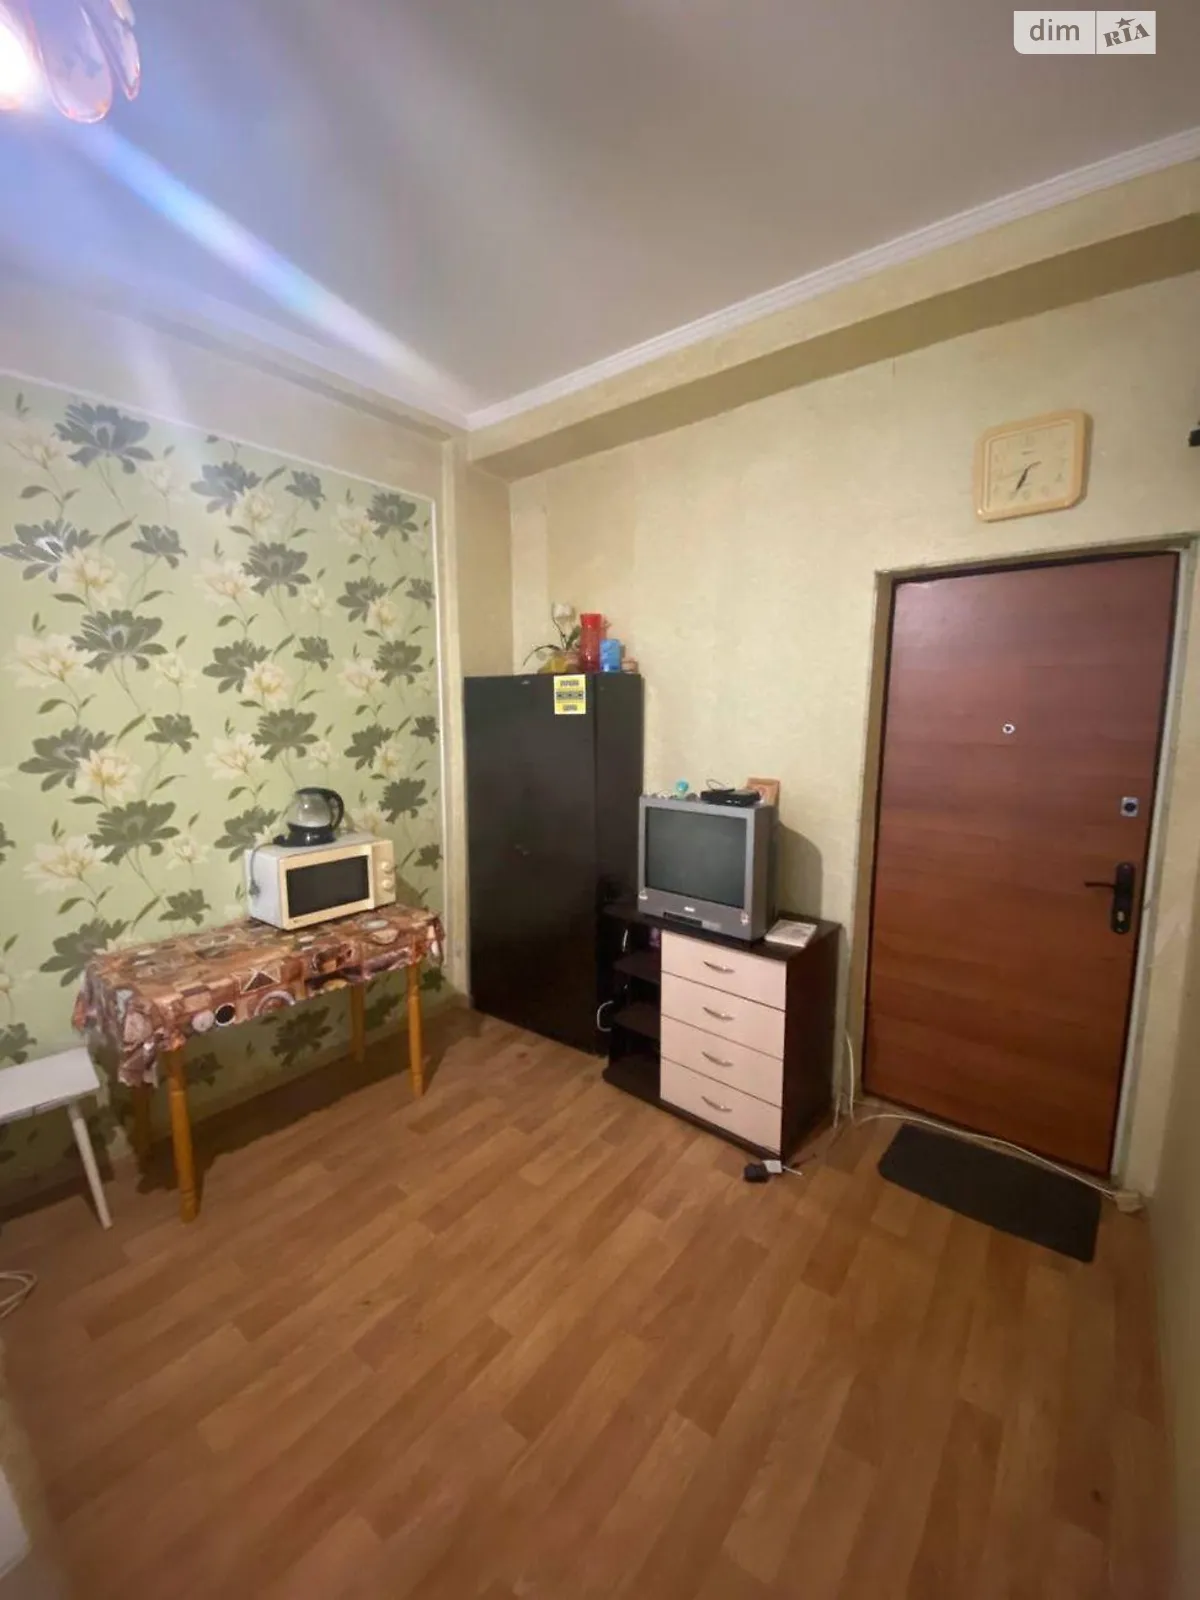 Продается комната 14 кв. м в Харькове - фото 3